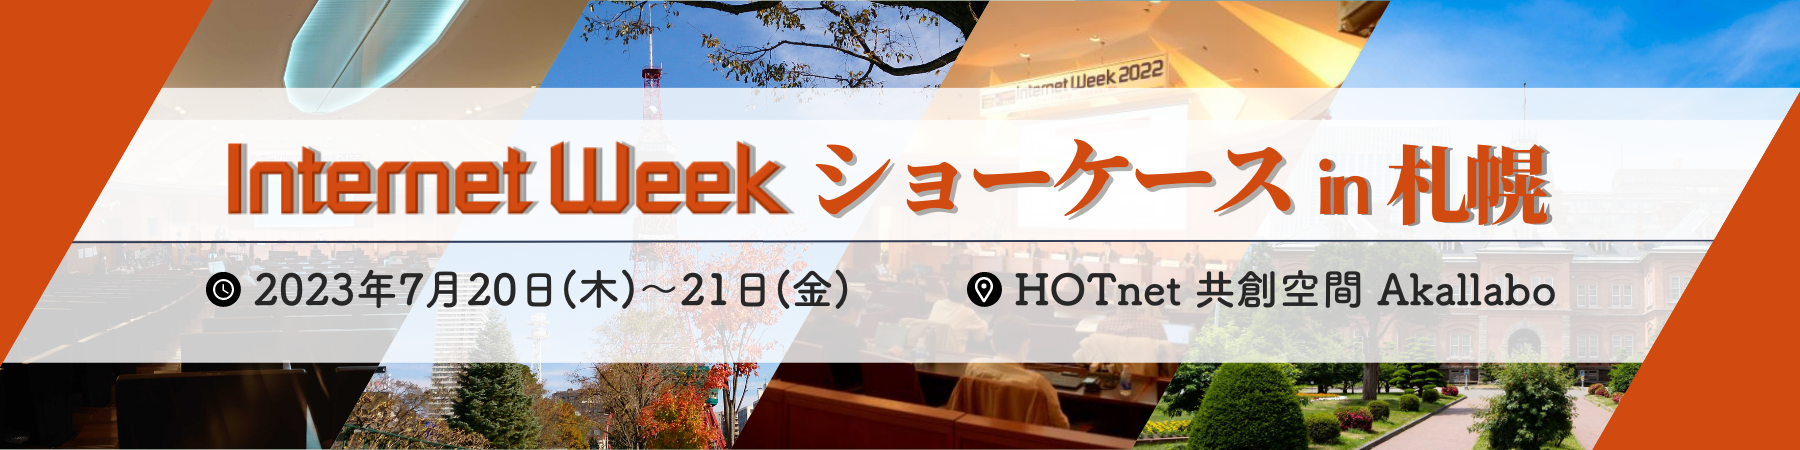 Internet Week ショーケース in 札幌